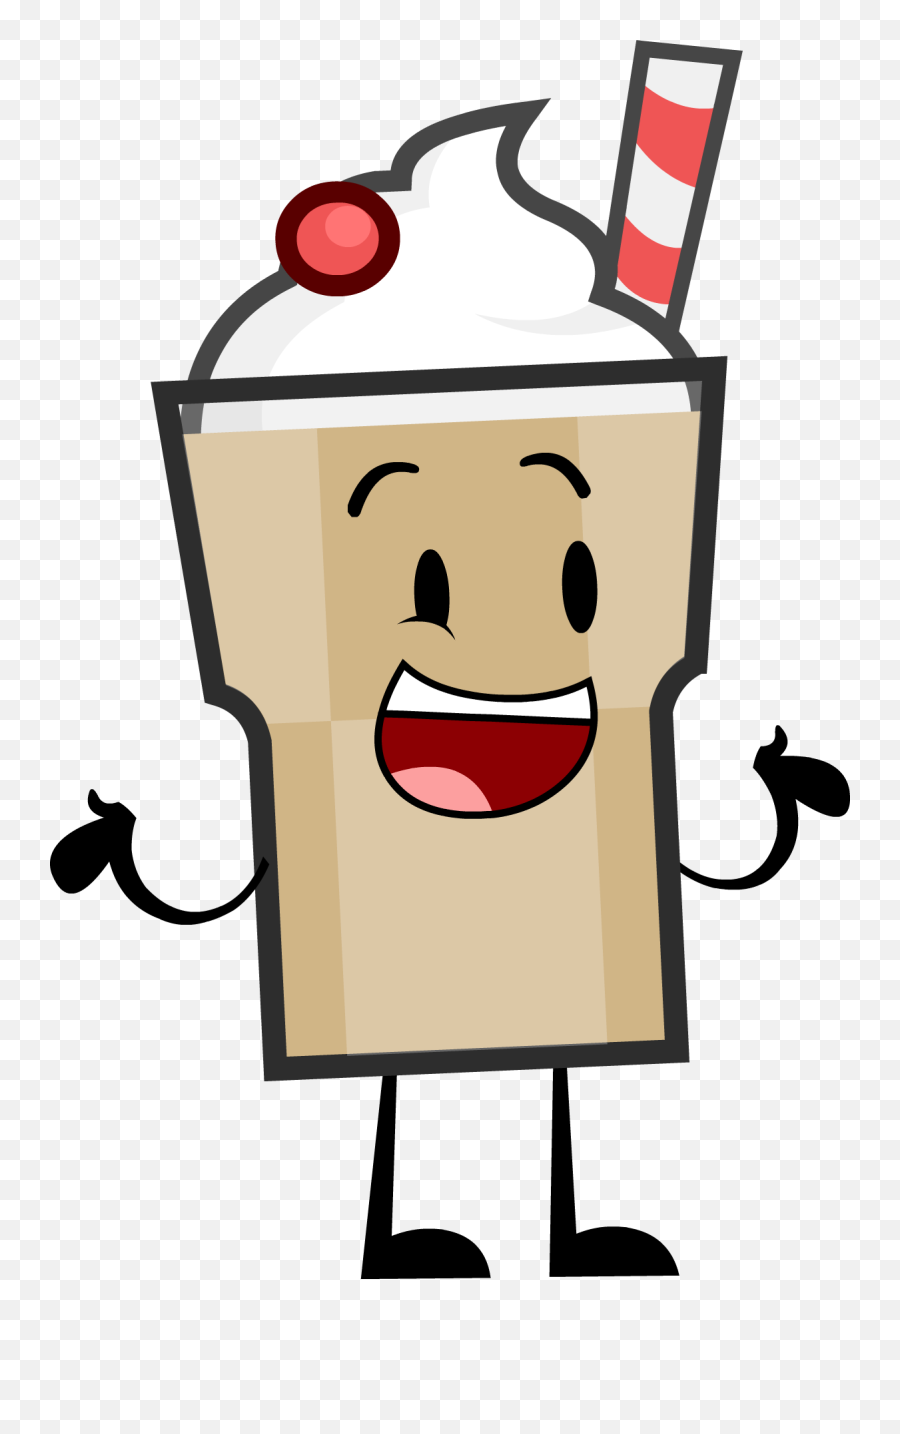 Milkshake Object Shows Community Fandom - Milkshake With Face Clipart Emoji,Milkshake Emoticon